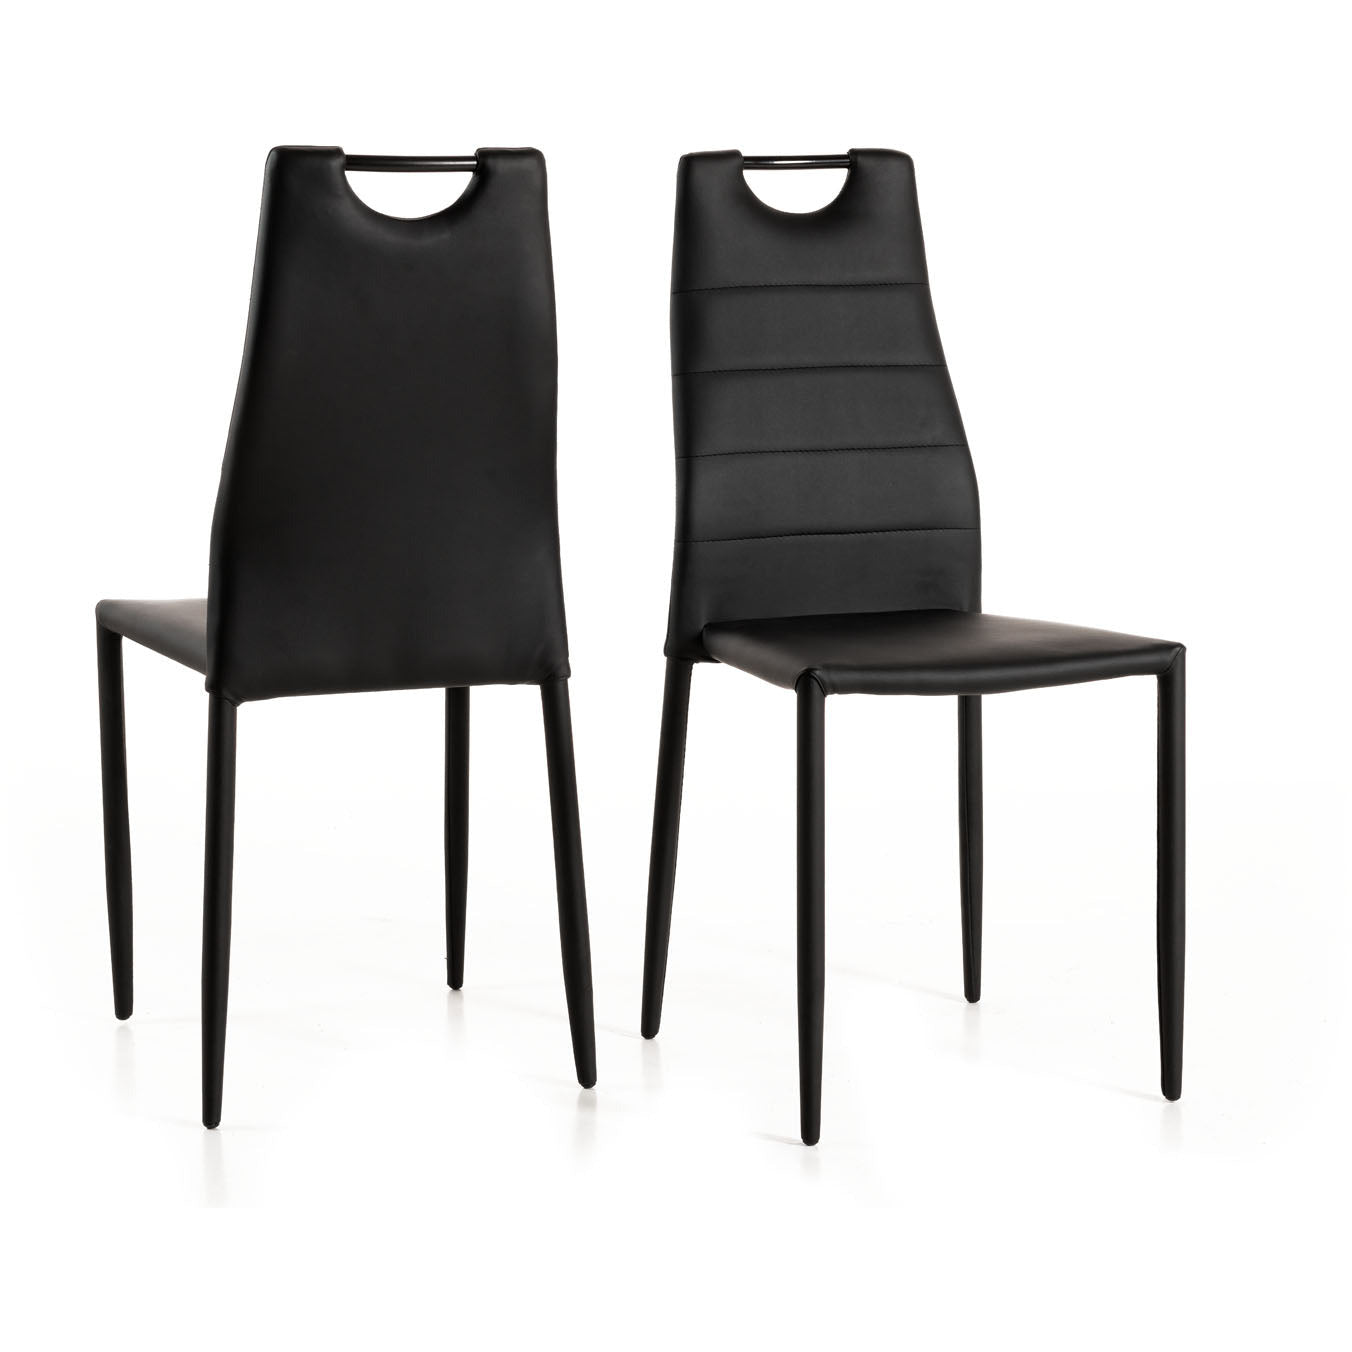 Dining room chair | Furniture series Rogon | Black | 41x46.5x95